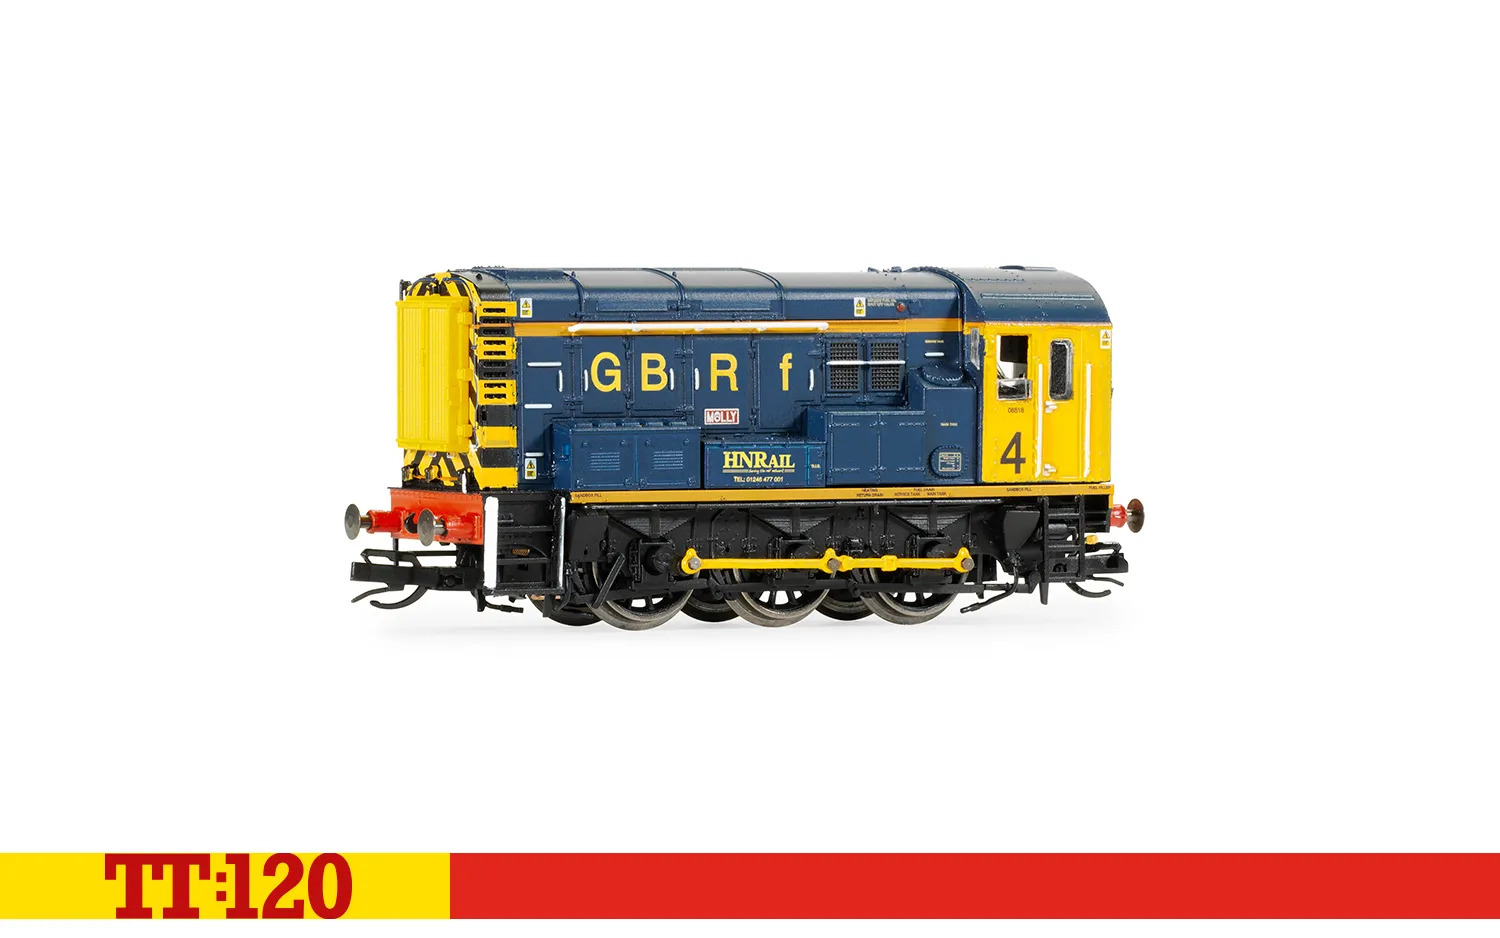 GBRf Classe 08 0-6-0 08924 - Ep. 11